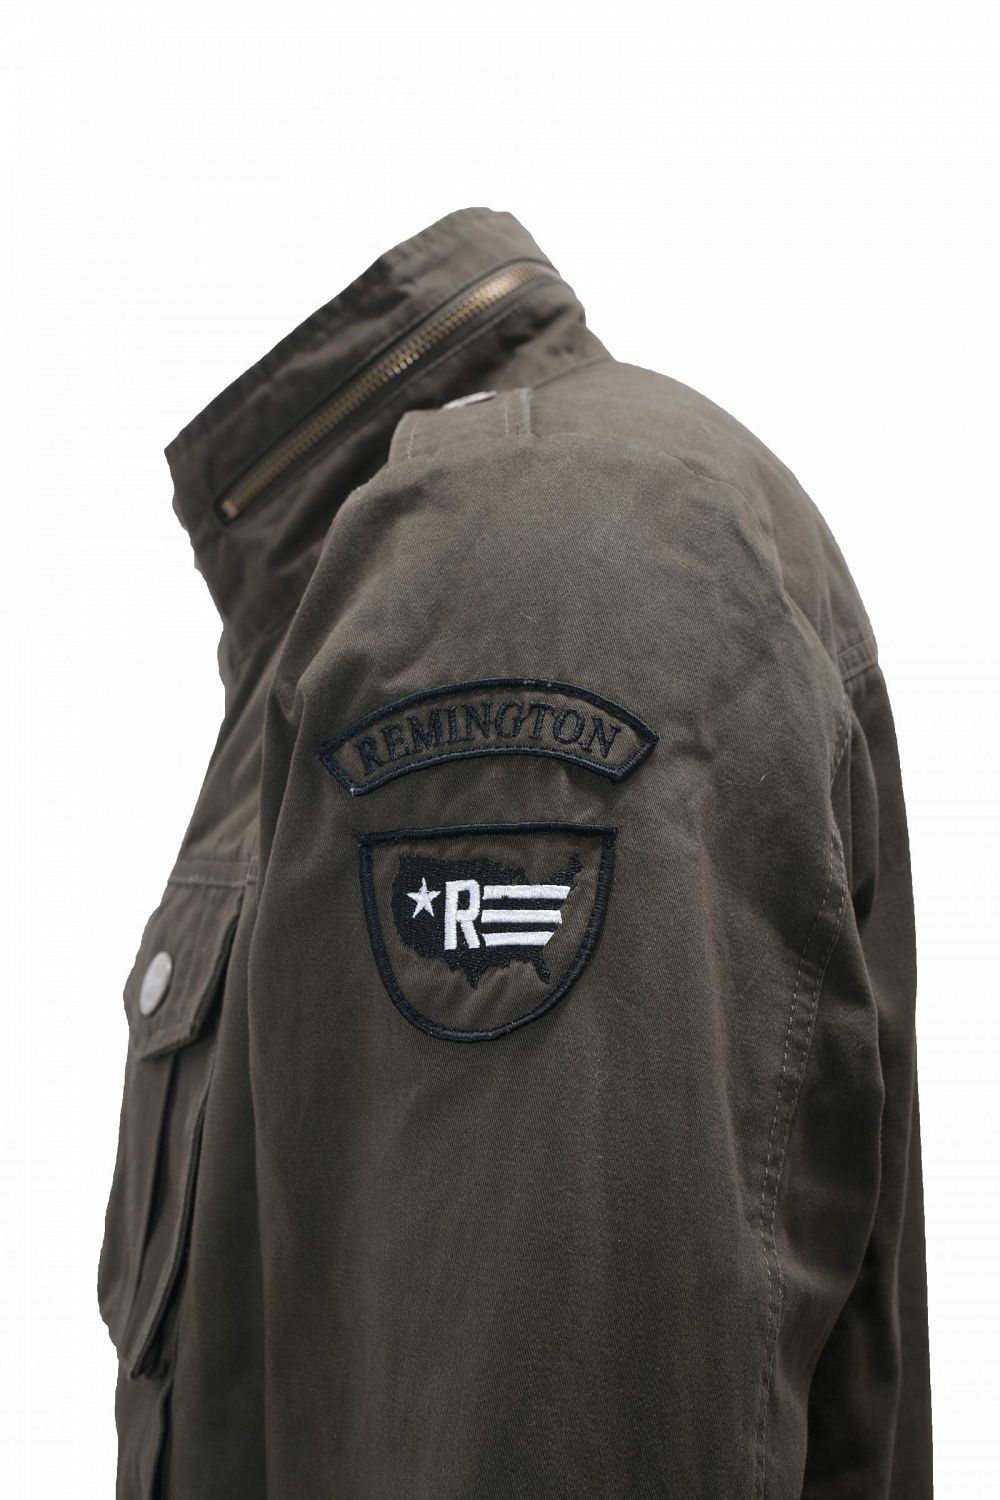 Remington Рубашка спортивная  Urban Pentagon